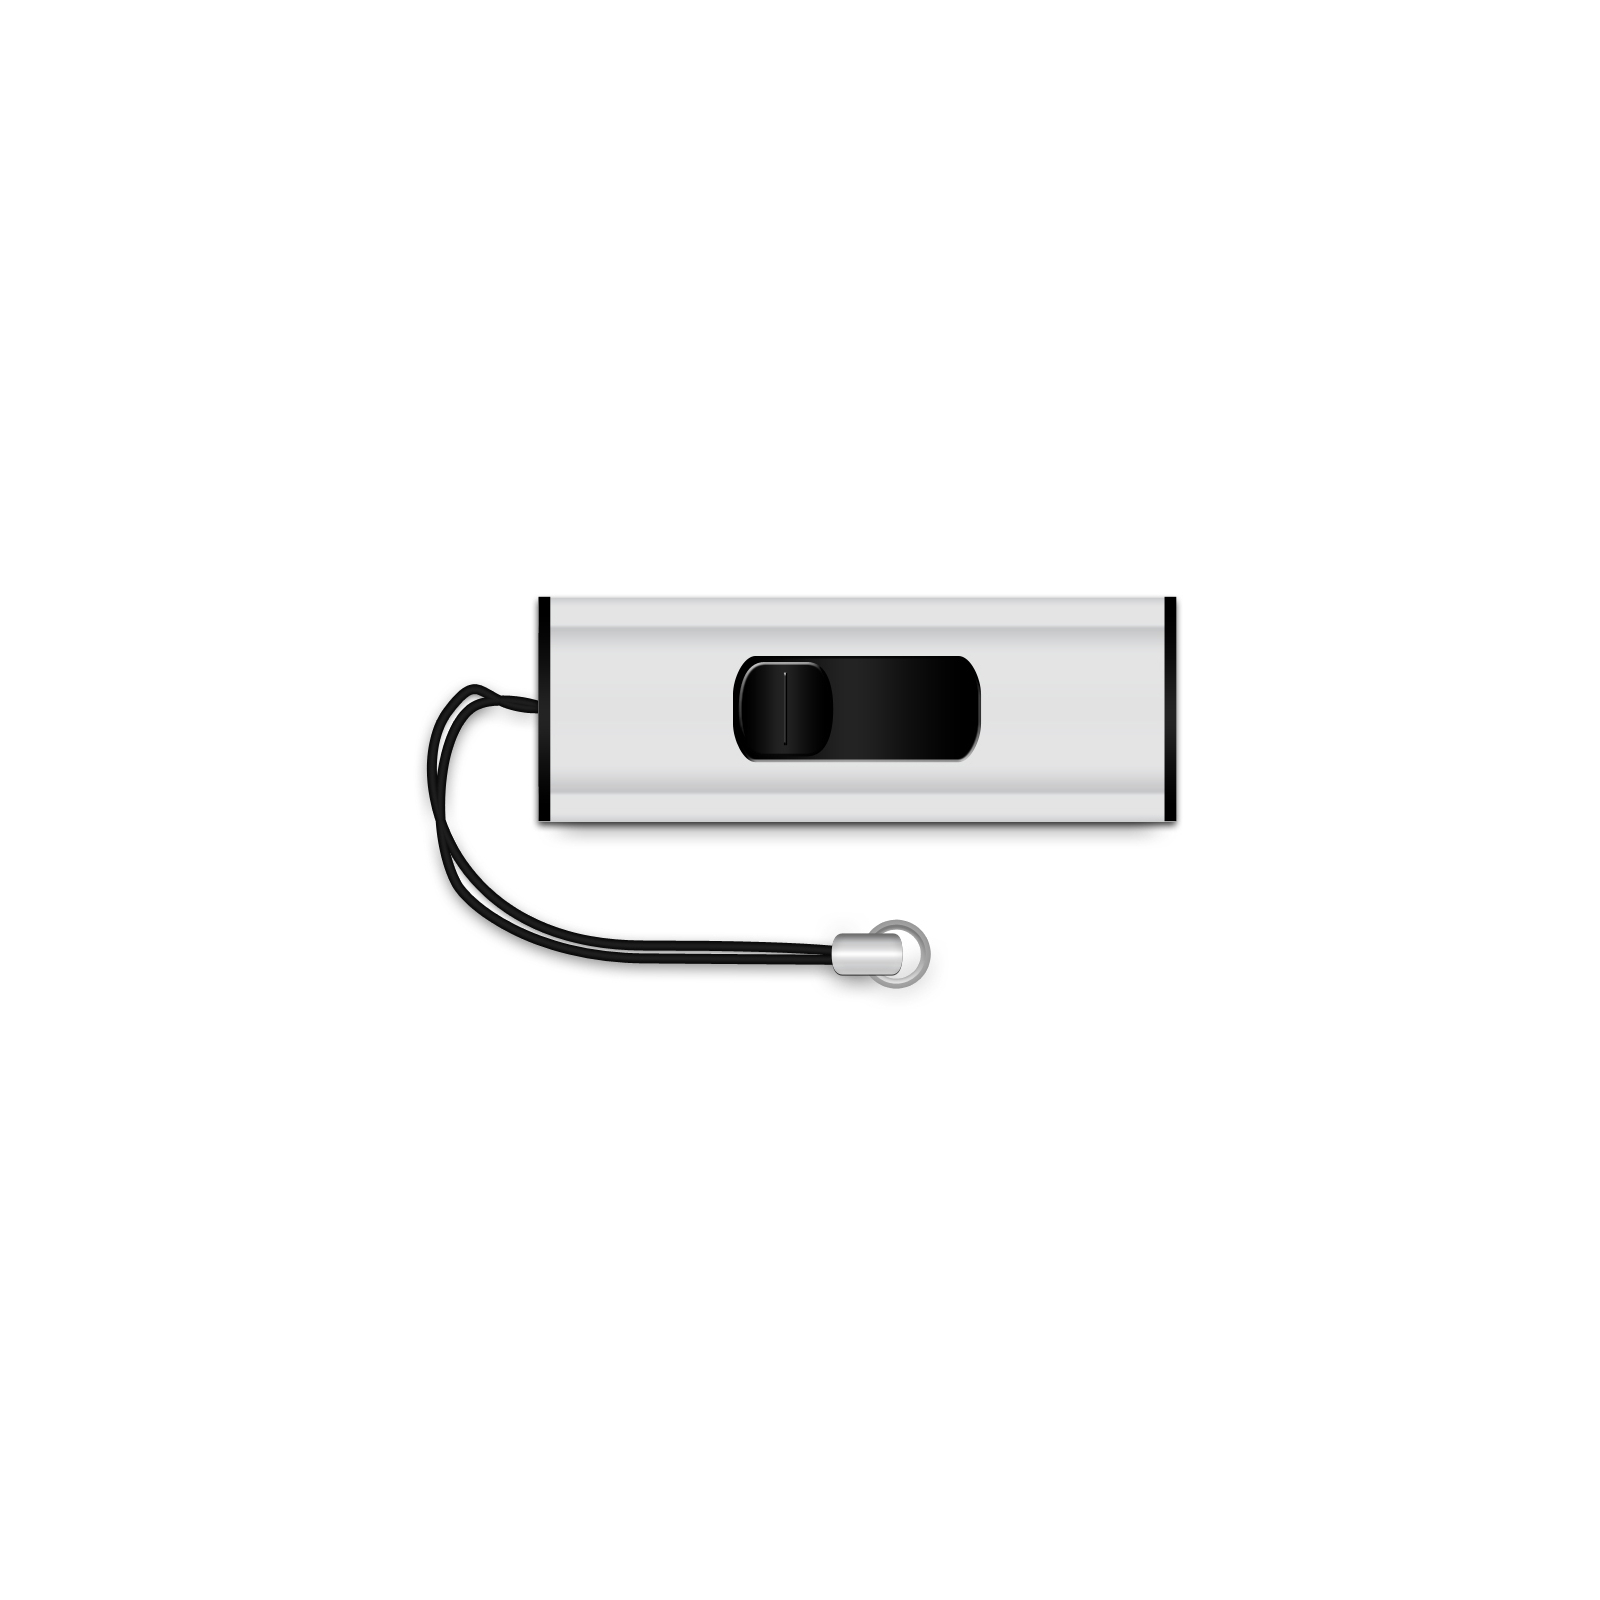 USB флеш накопитель Mediarange 32GB Black/Silver USB 3.0 (MR916) изображение 2